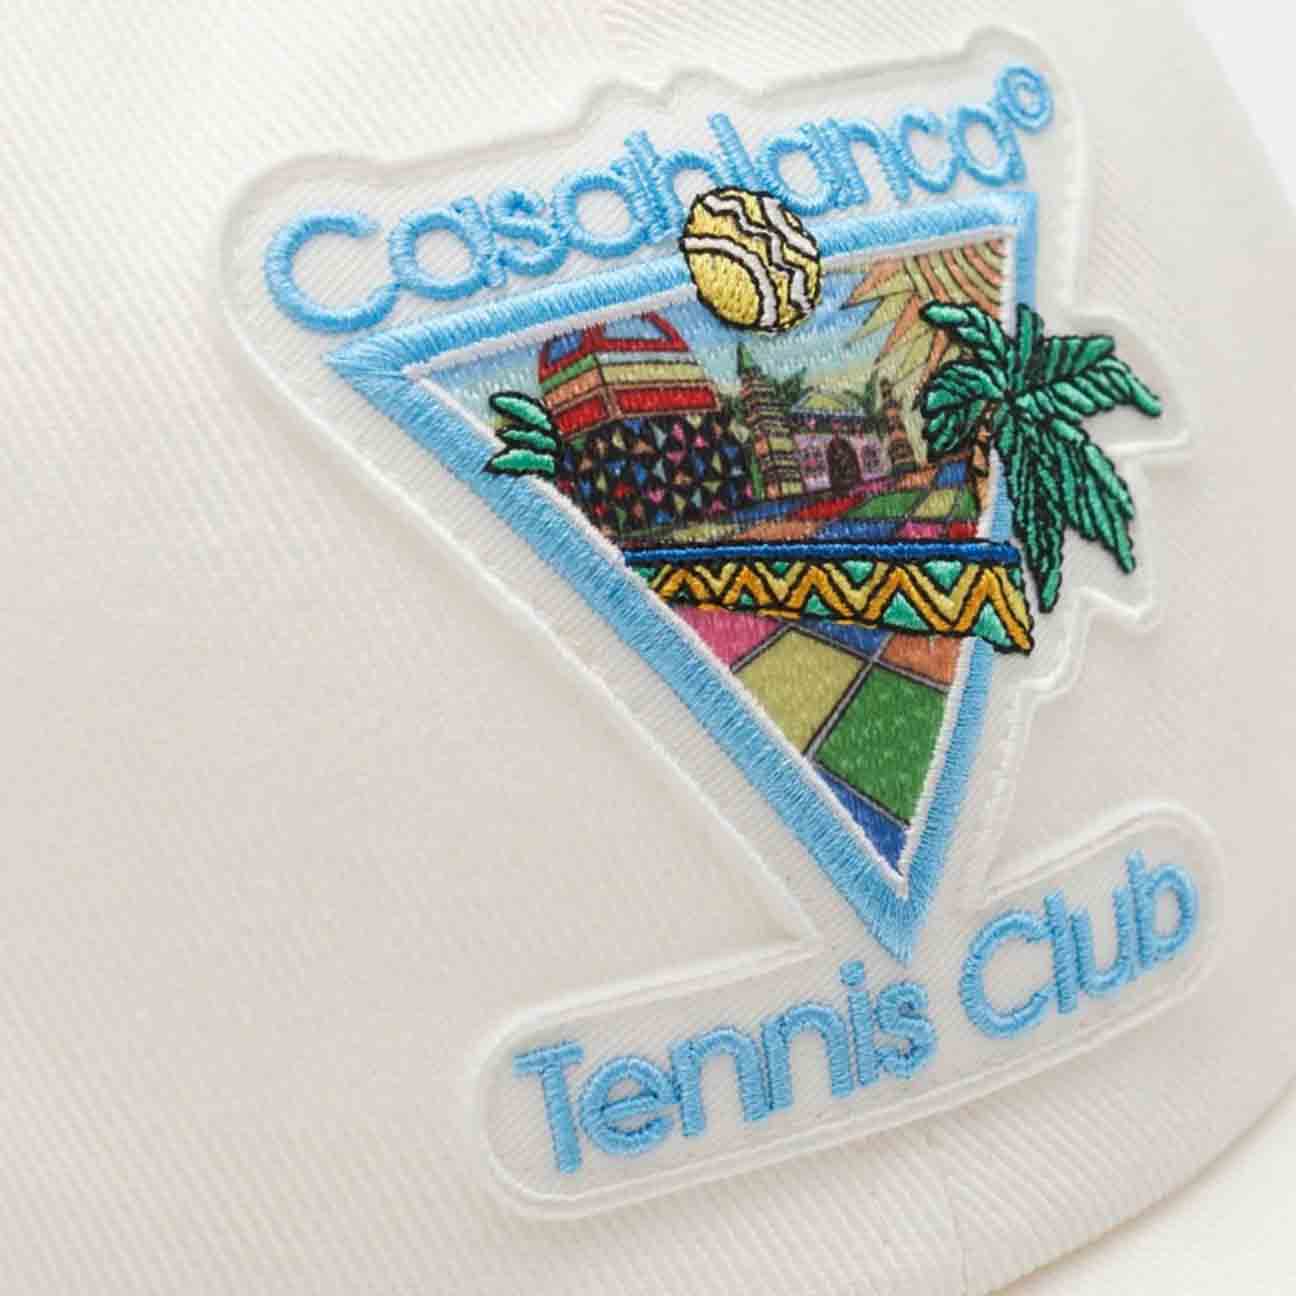 Casablanca Afro Cubism Tennis Club Patch Cap in Off White Twill